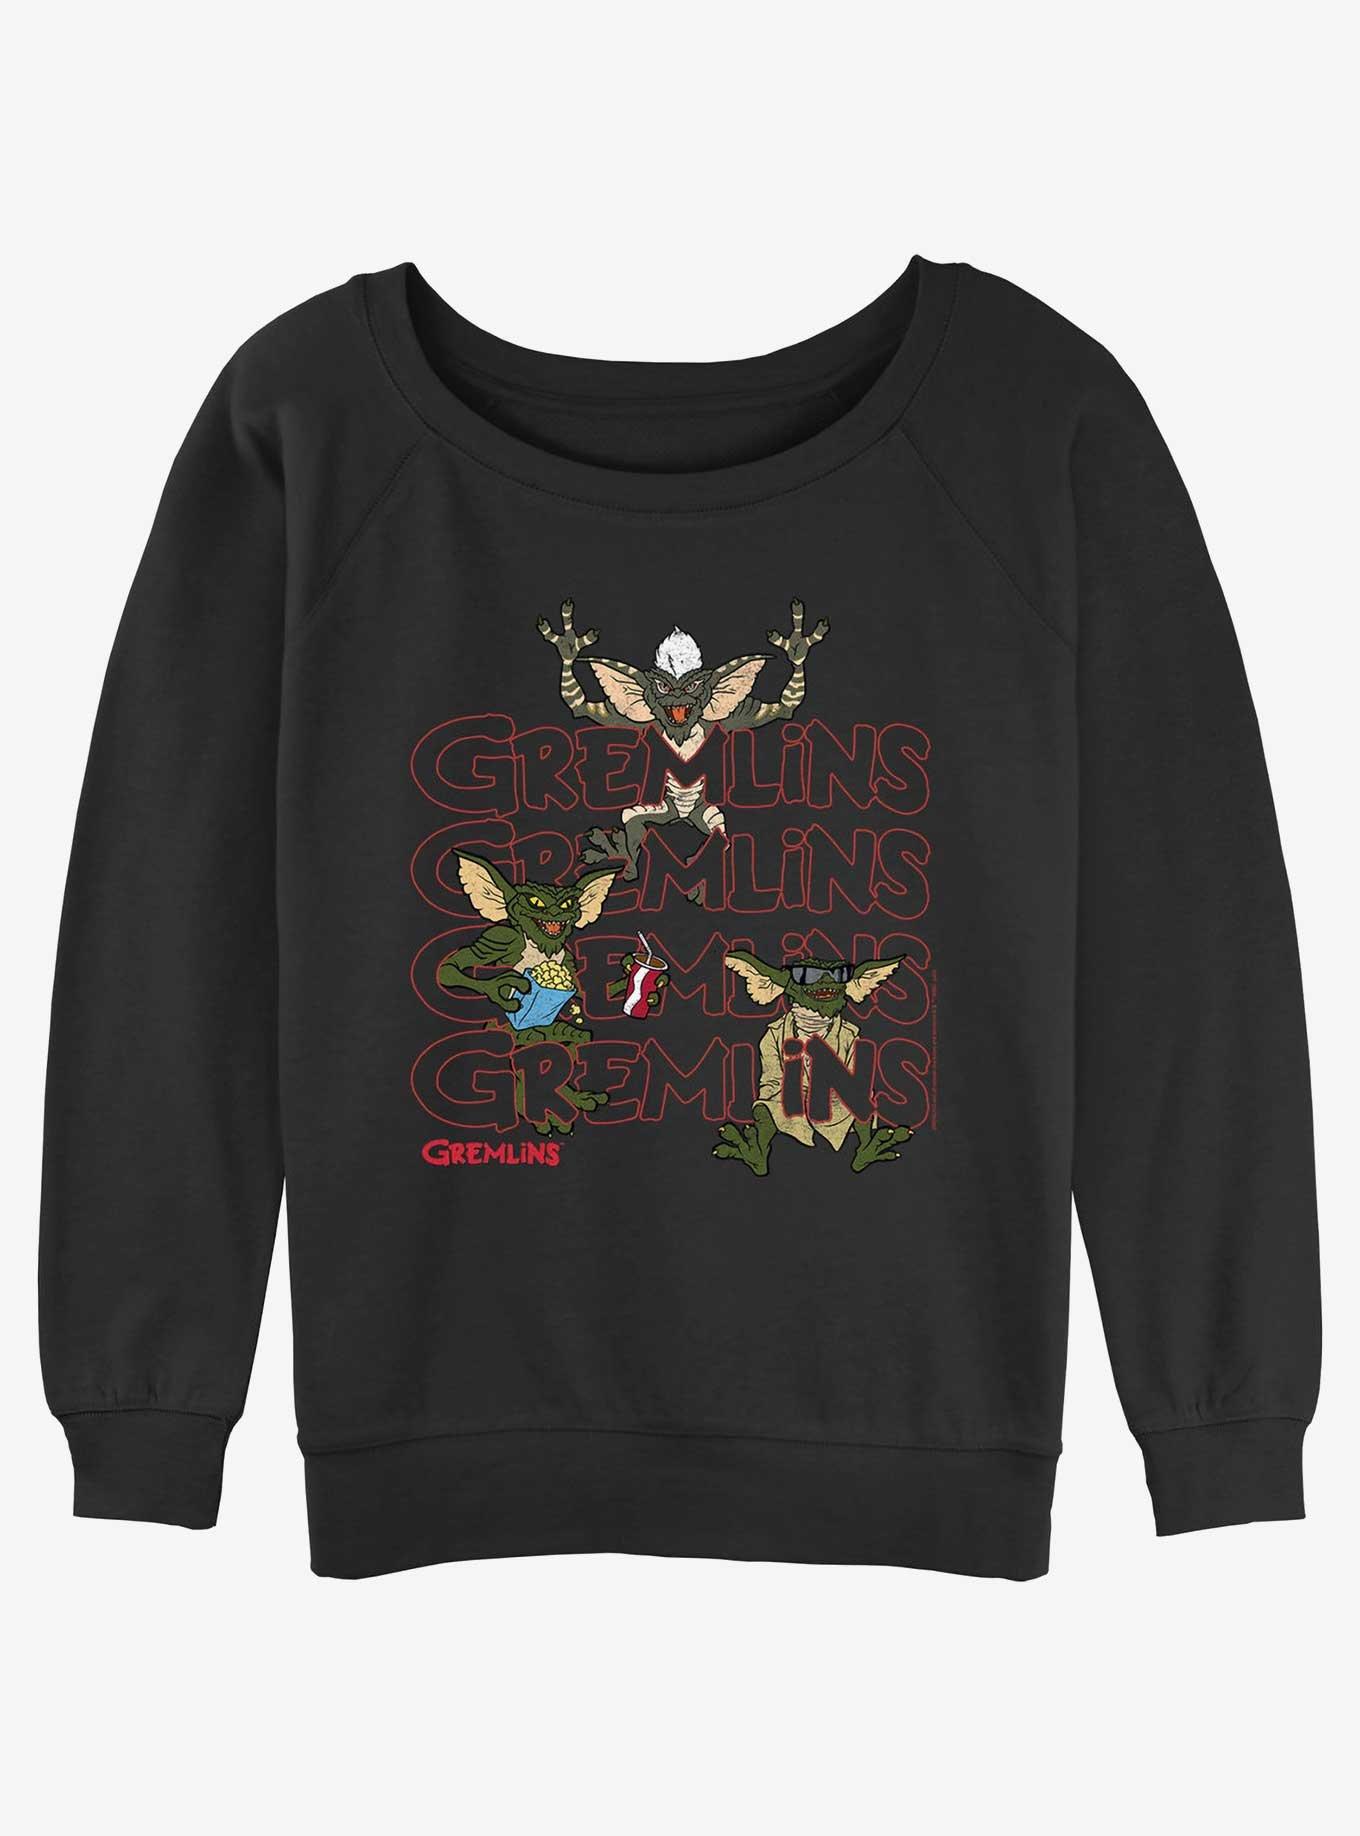 Gremlins Gremlin Crawl Girls Slouchy Sweatshirt